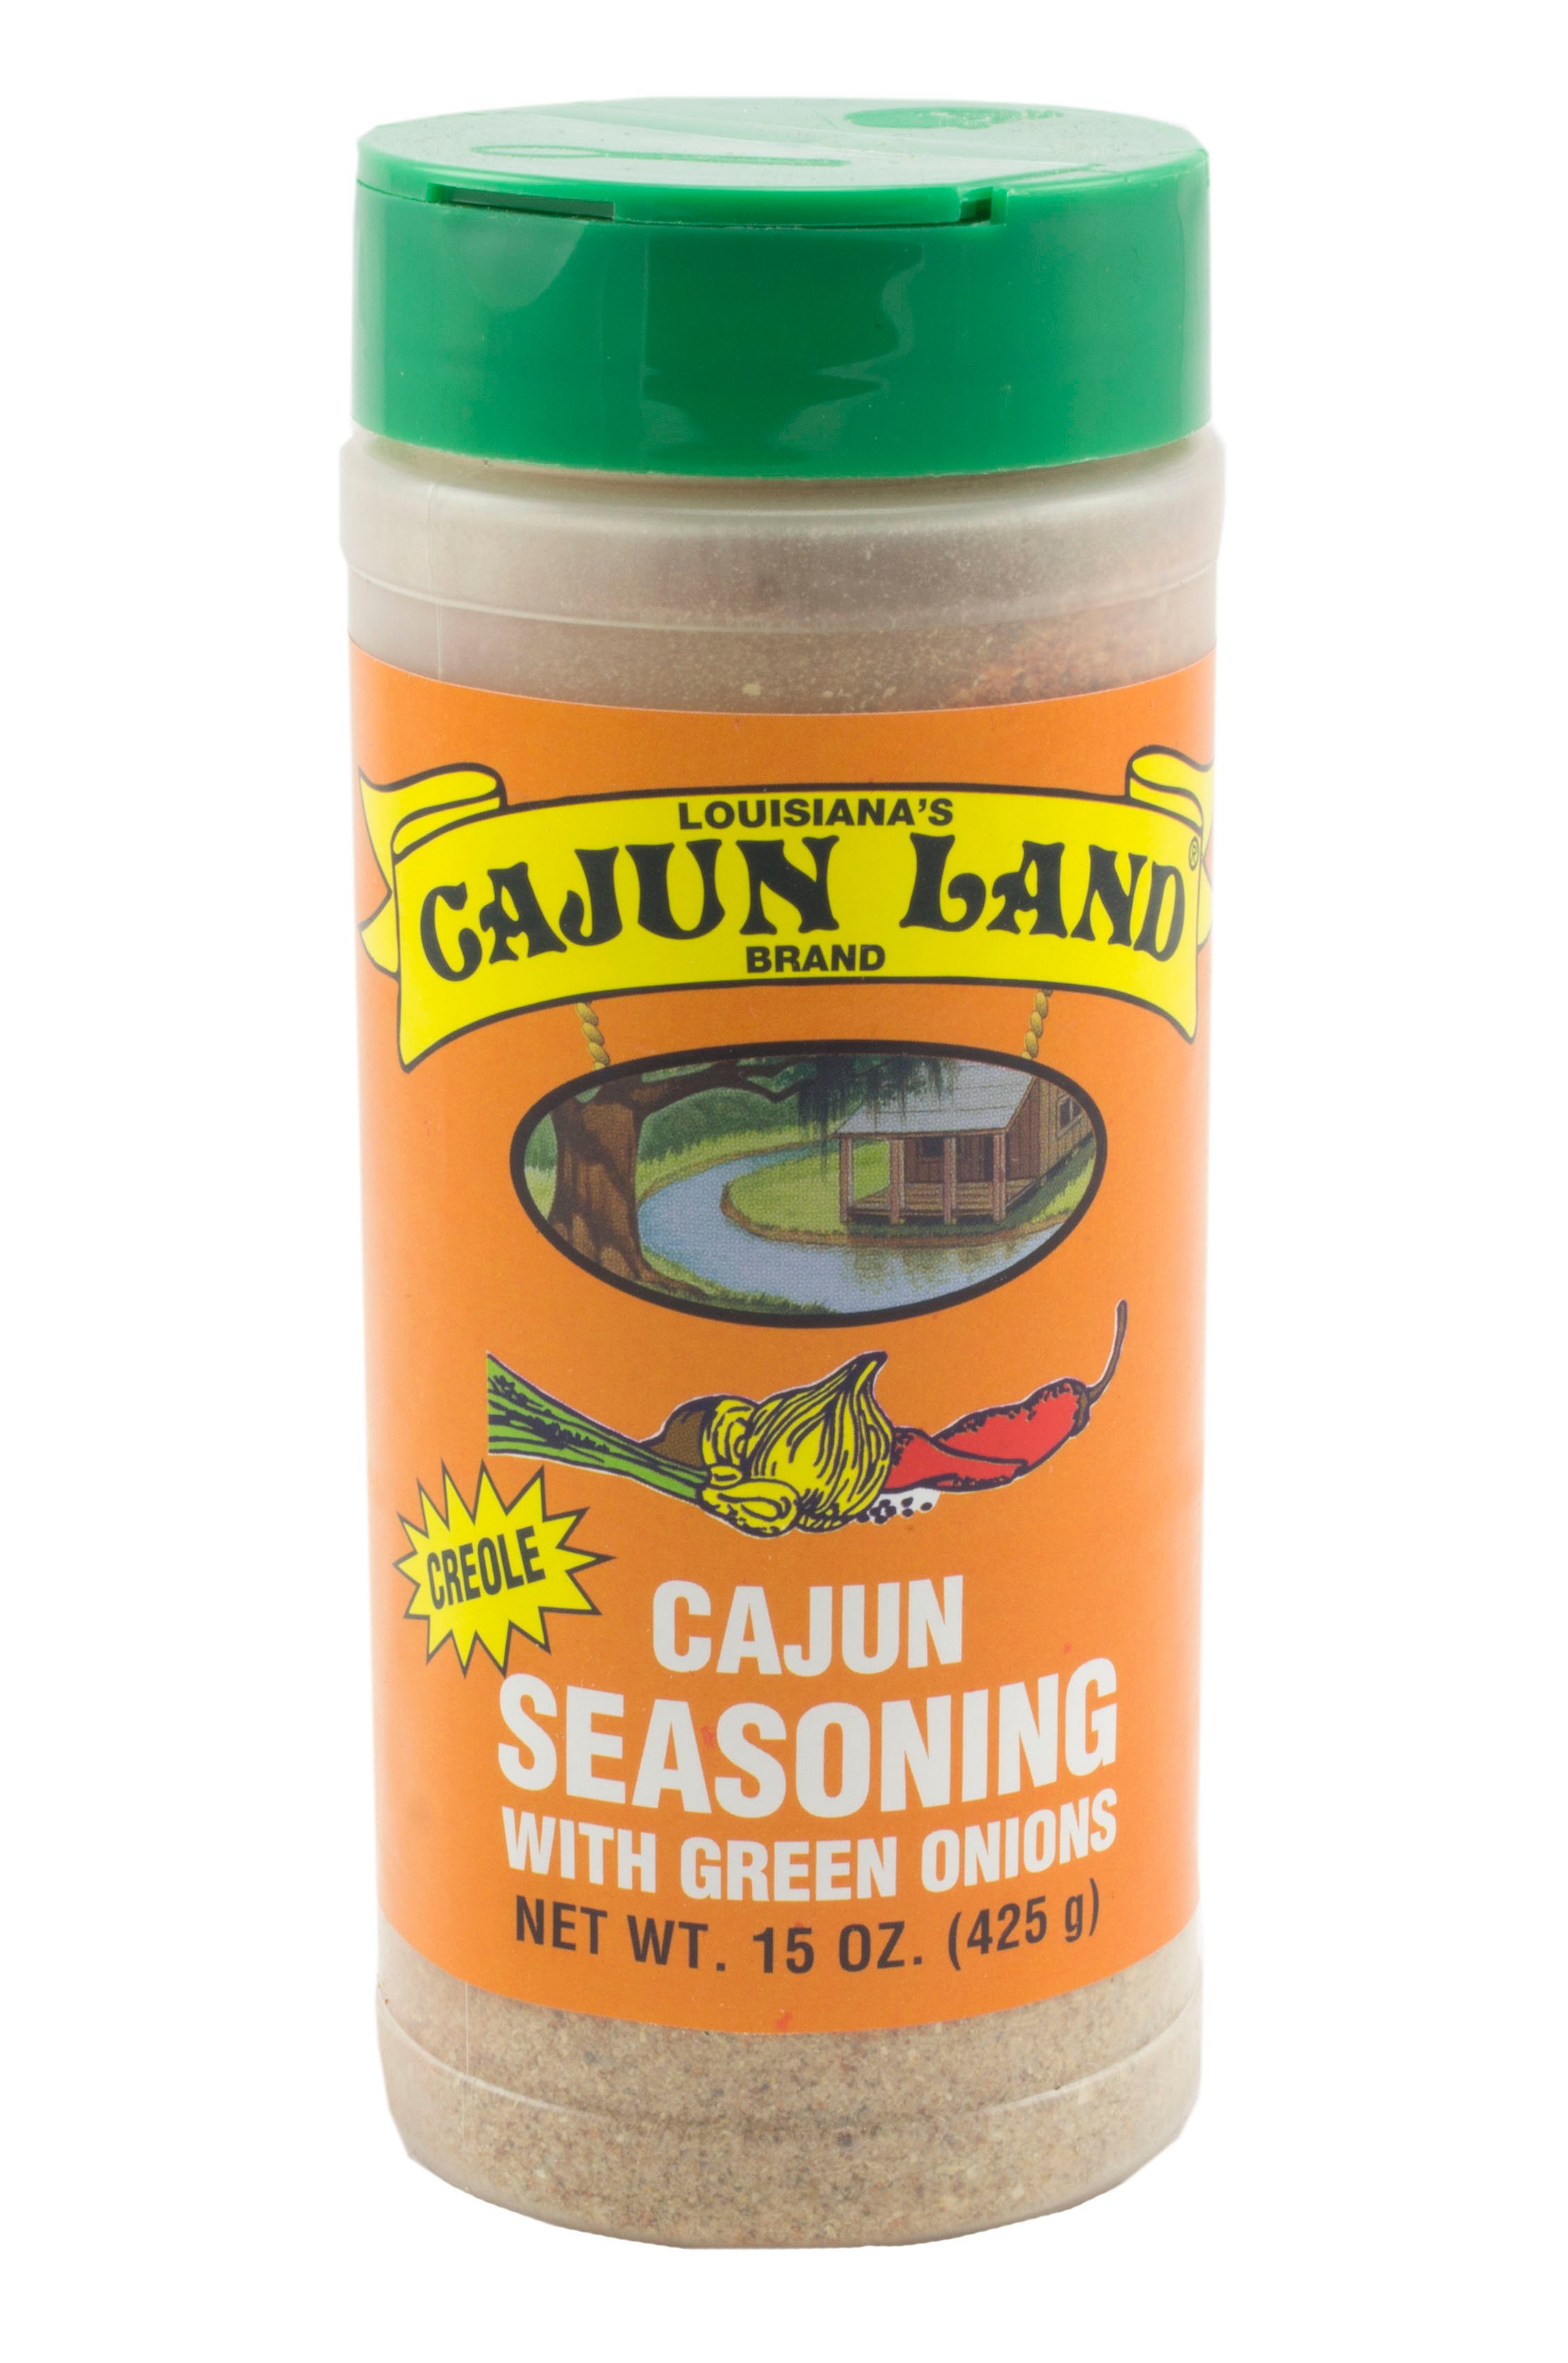 Cajun Land Cajun Seasoning with Green Onions 7 oz Pack of 2 - 736684087777